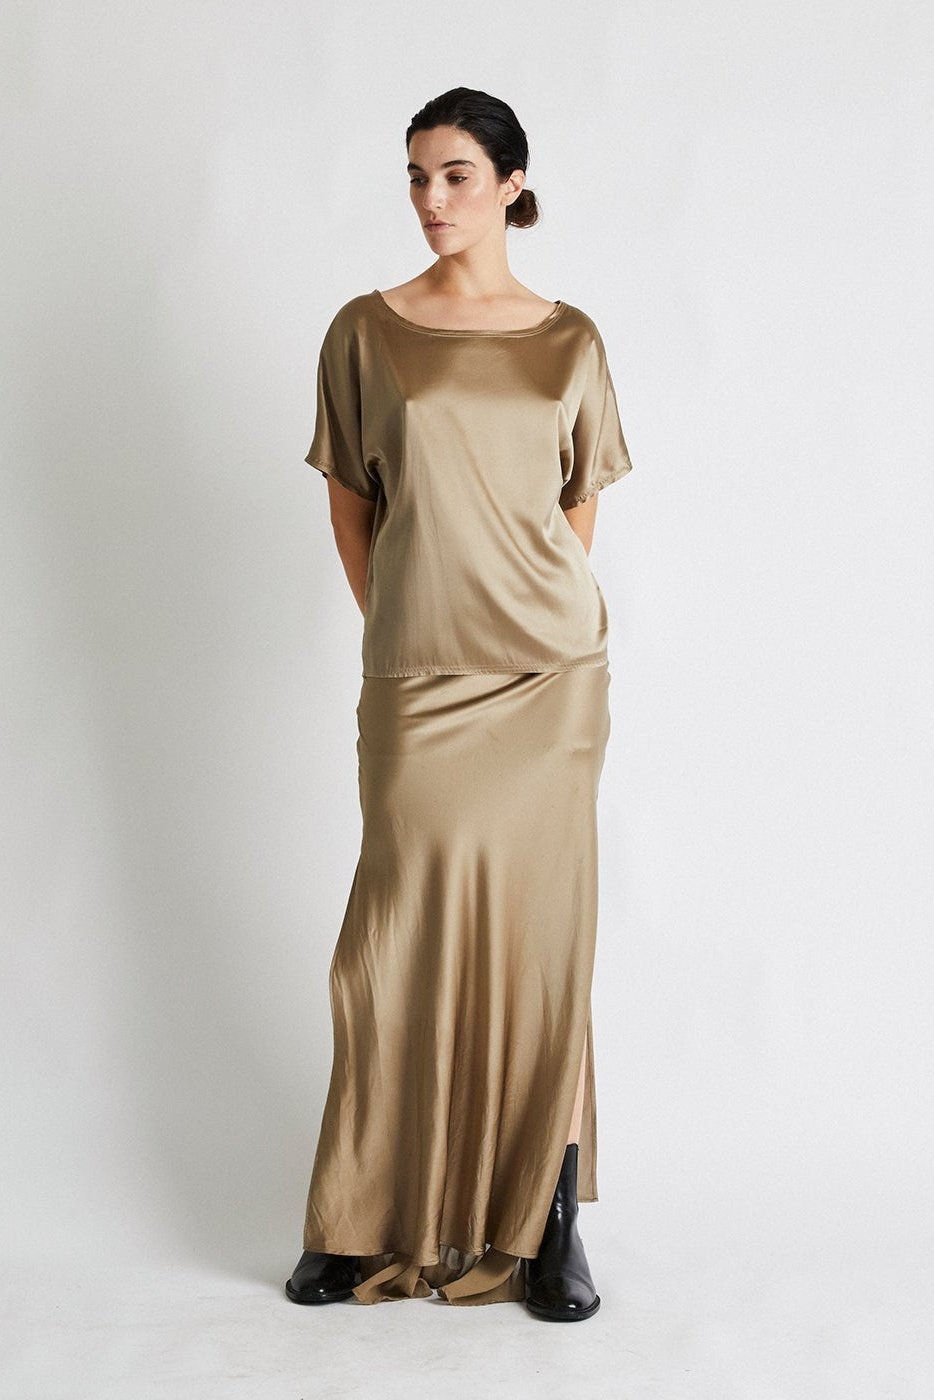 +Beryll Silk Skirt | Helena | Caramel - +Beryll Silk Skirt | Helena | Caramel - +Beryll Worn By Good People